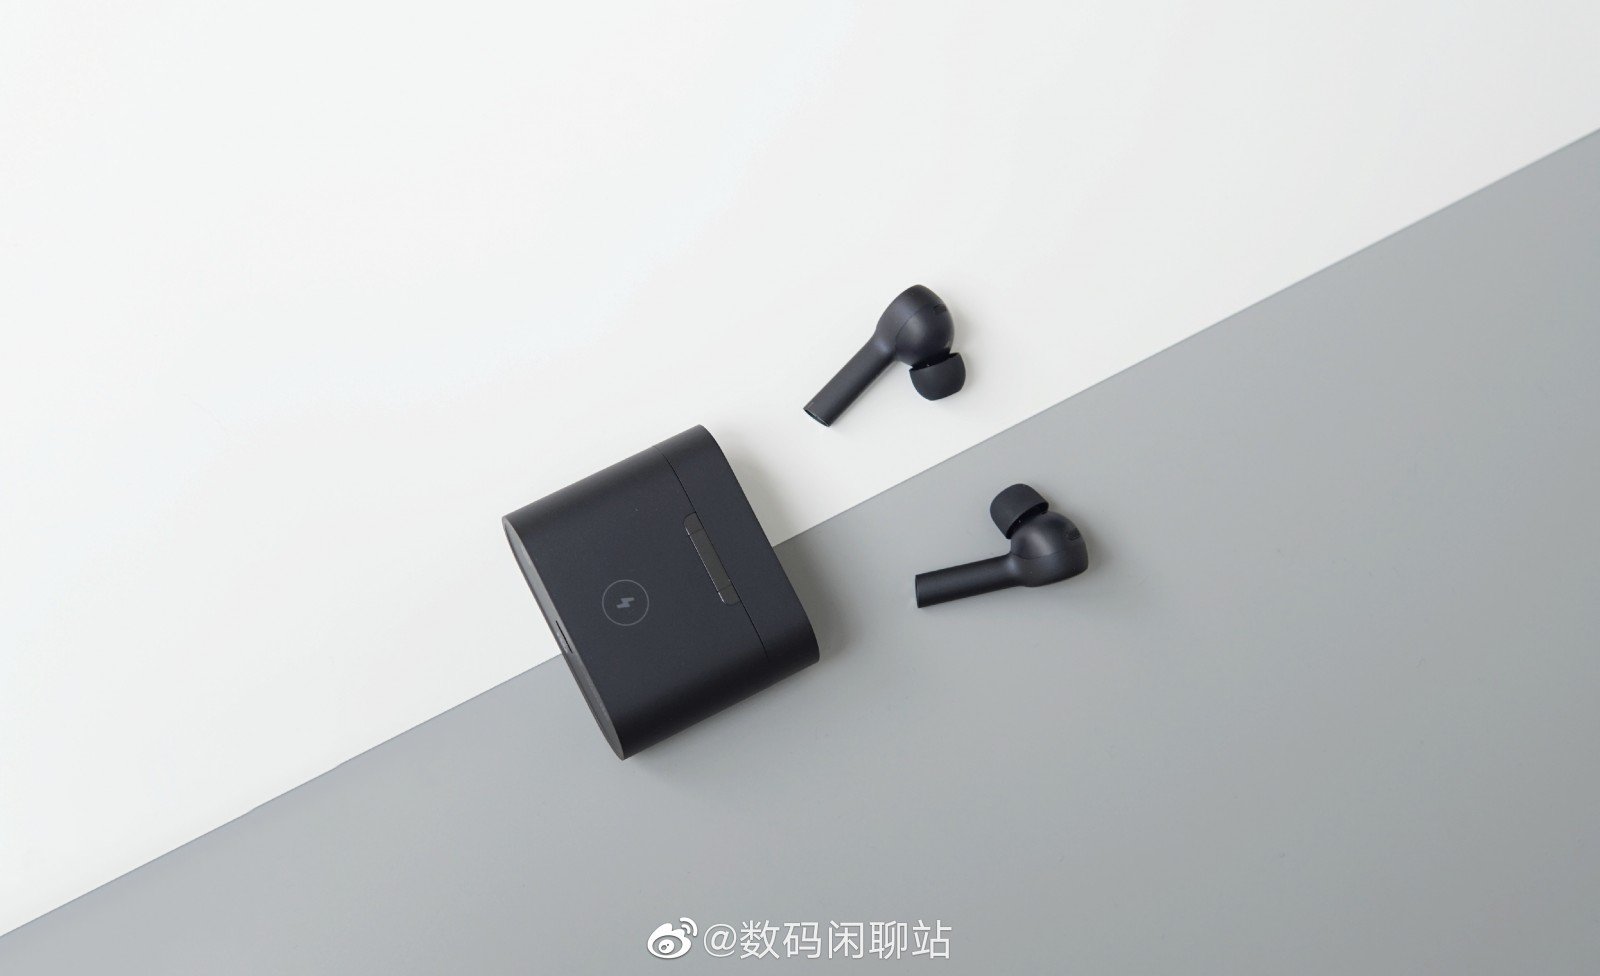 Xiaomi Earphone Air 2 Pro